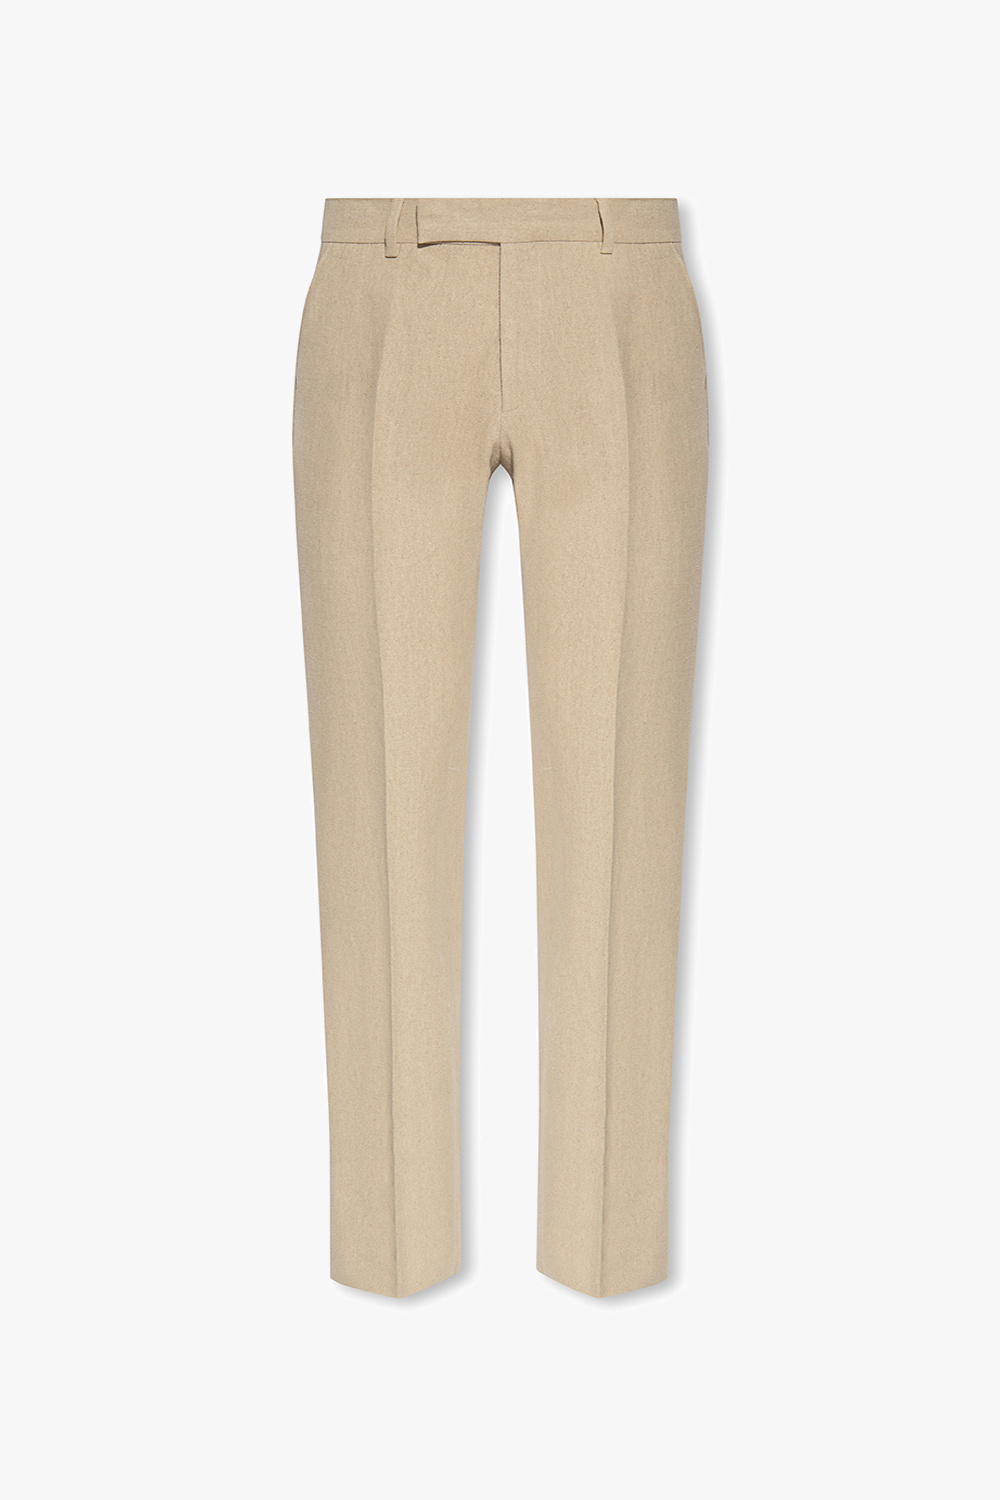 Jacquemus ‘Feijoa’ pleat-front trousers